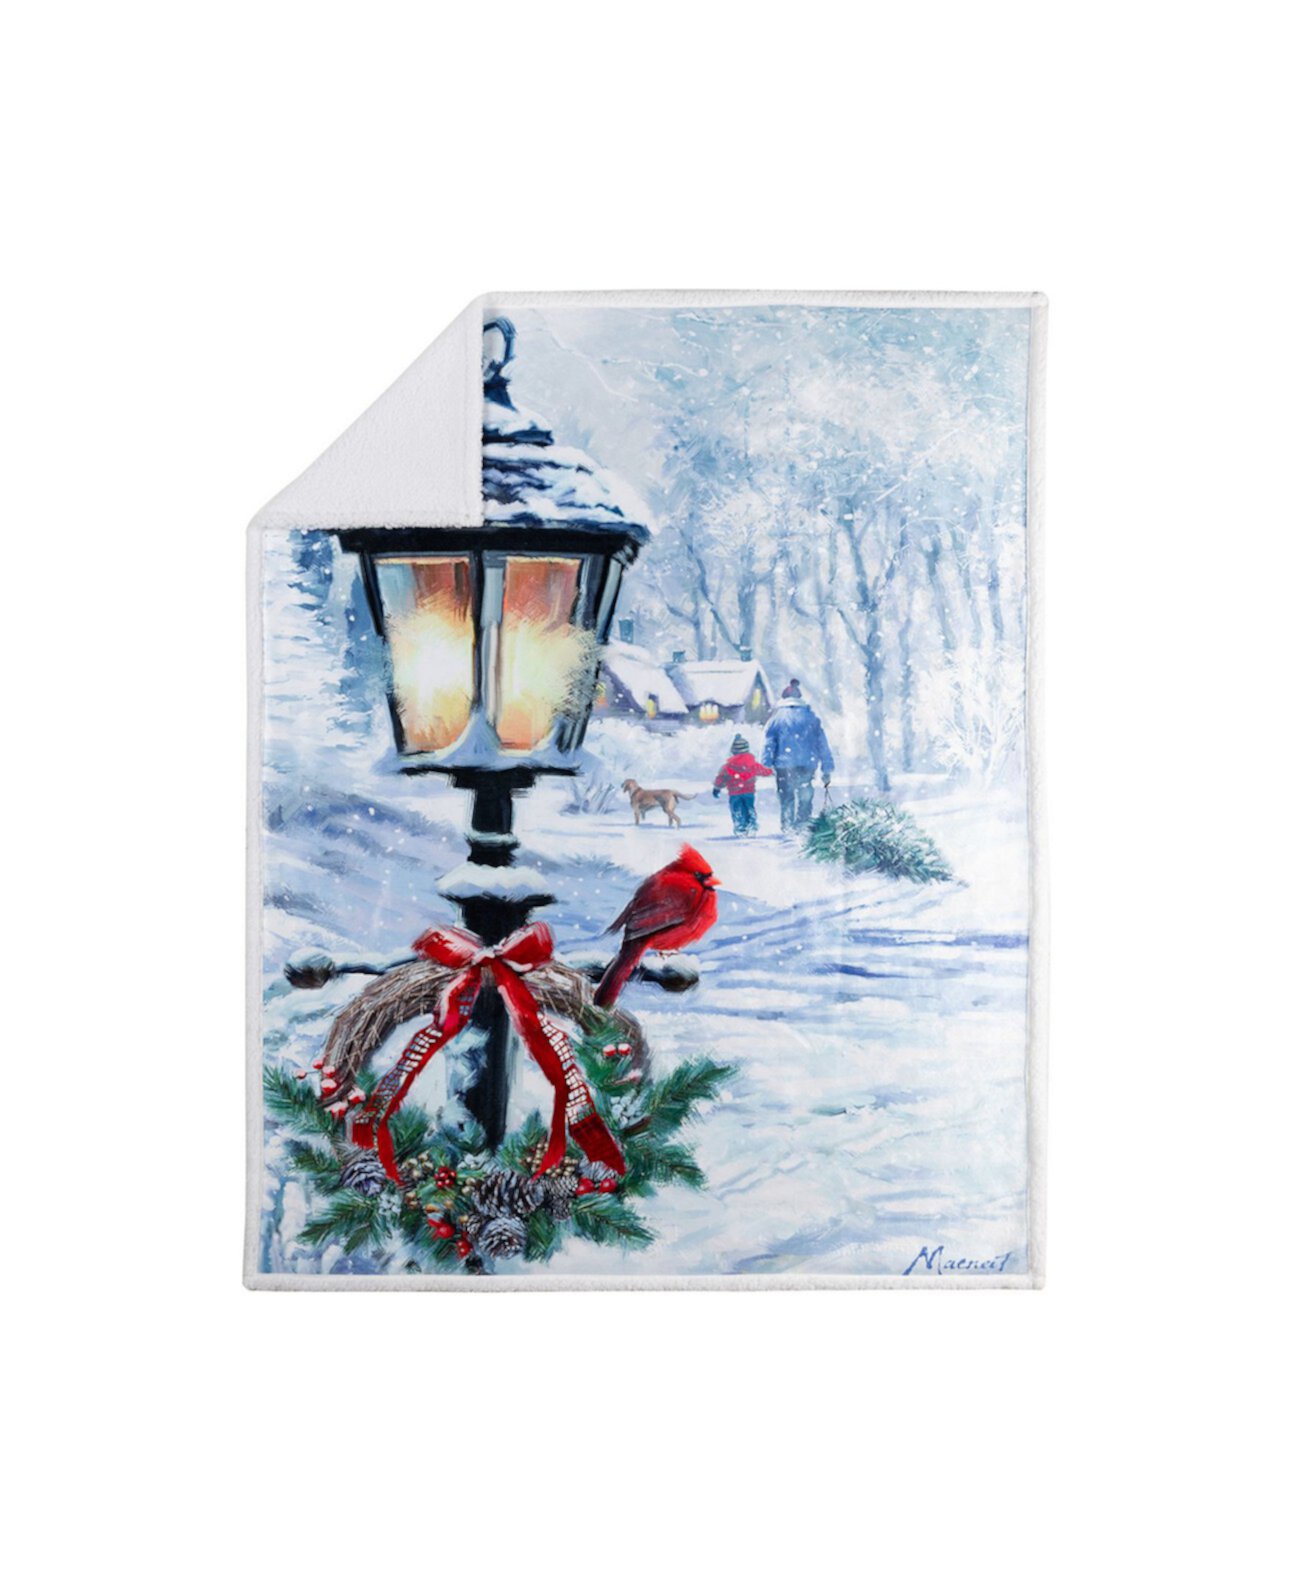 Inc Knit Printed Christmas Throw Christmas Lantern Safdie & Co.